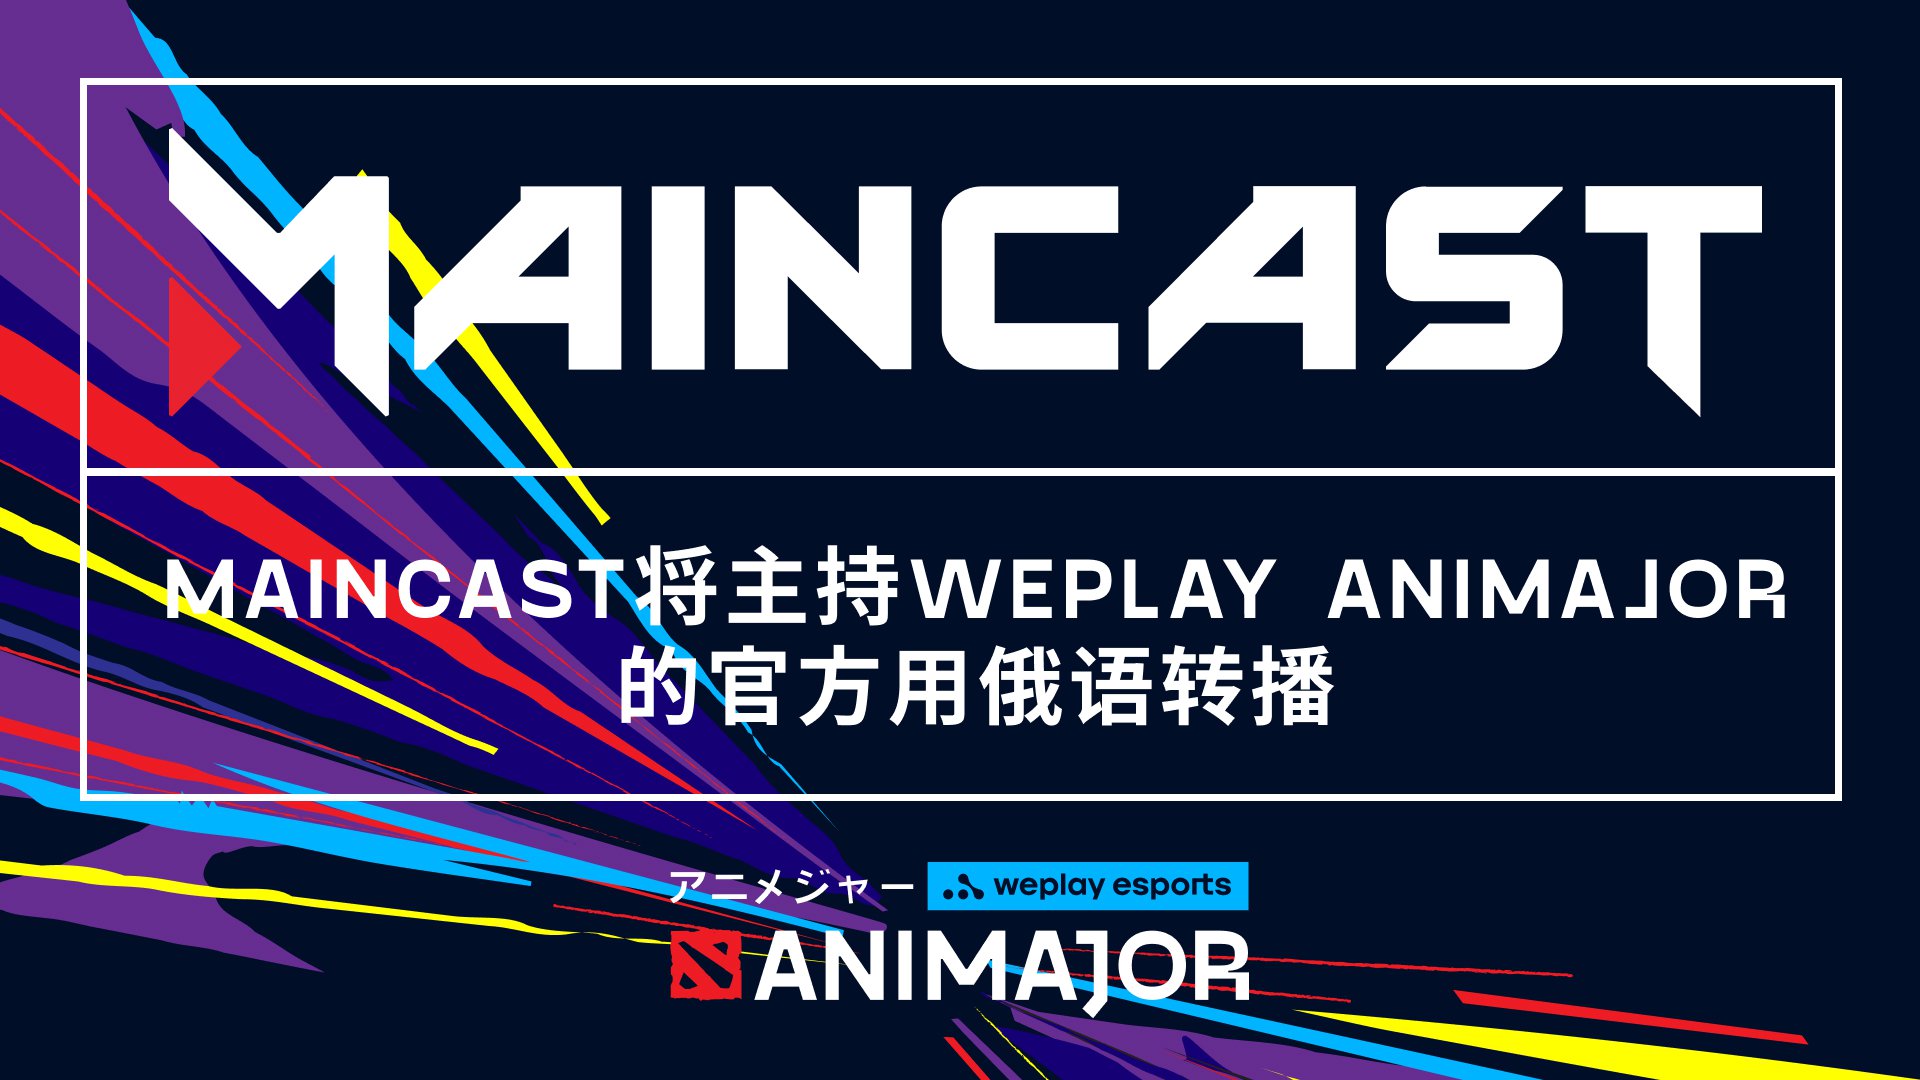 Maincast将主持WePlay AniMajor的官方用俄语转播. : 图像WePlay Esports